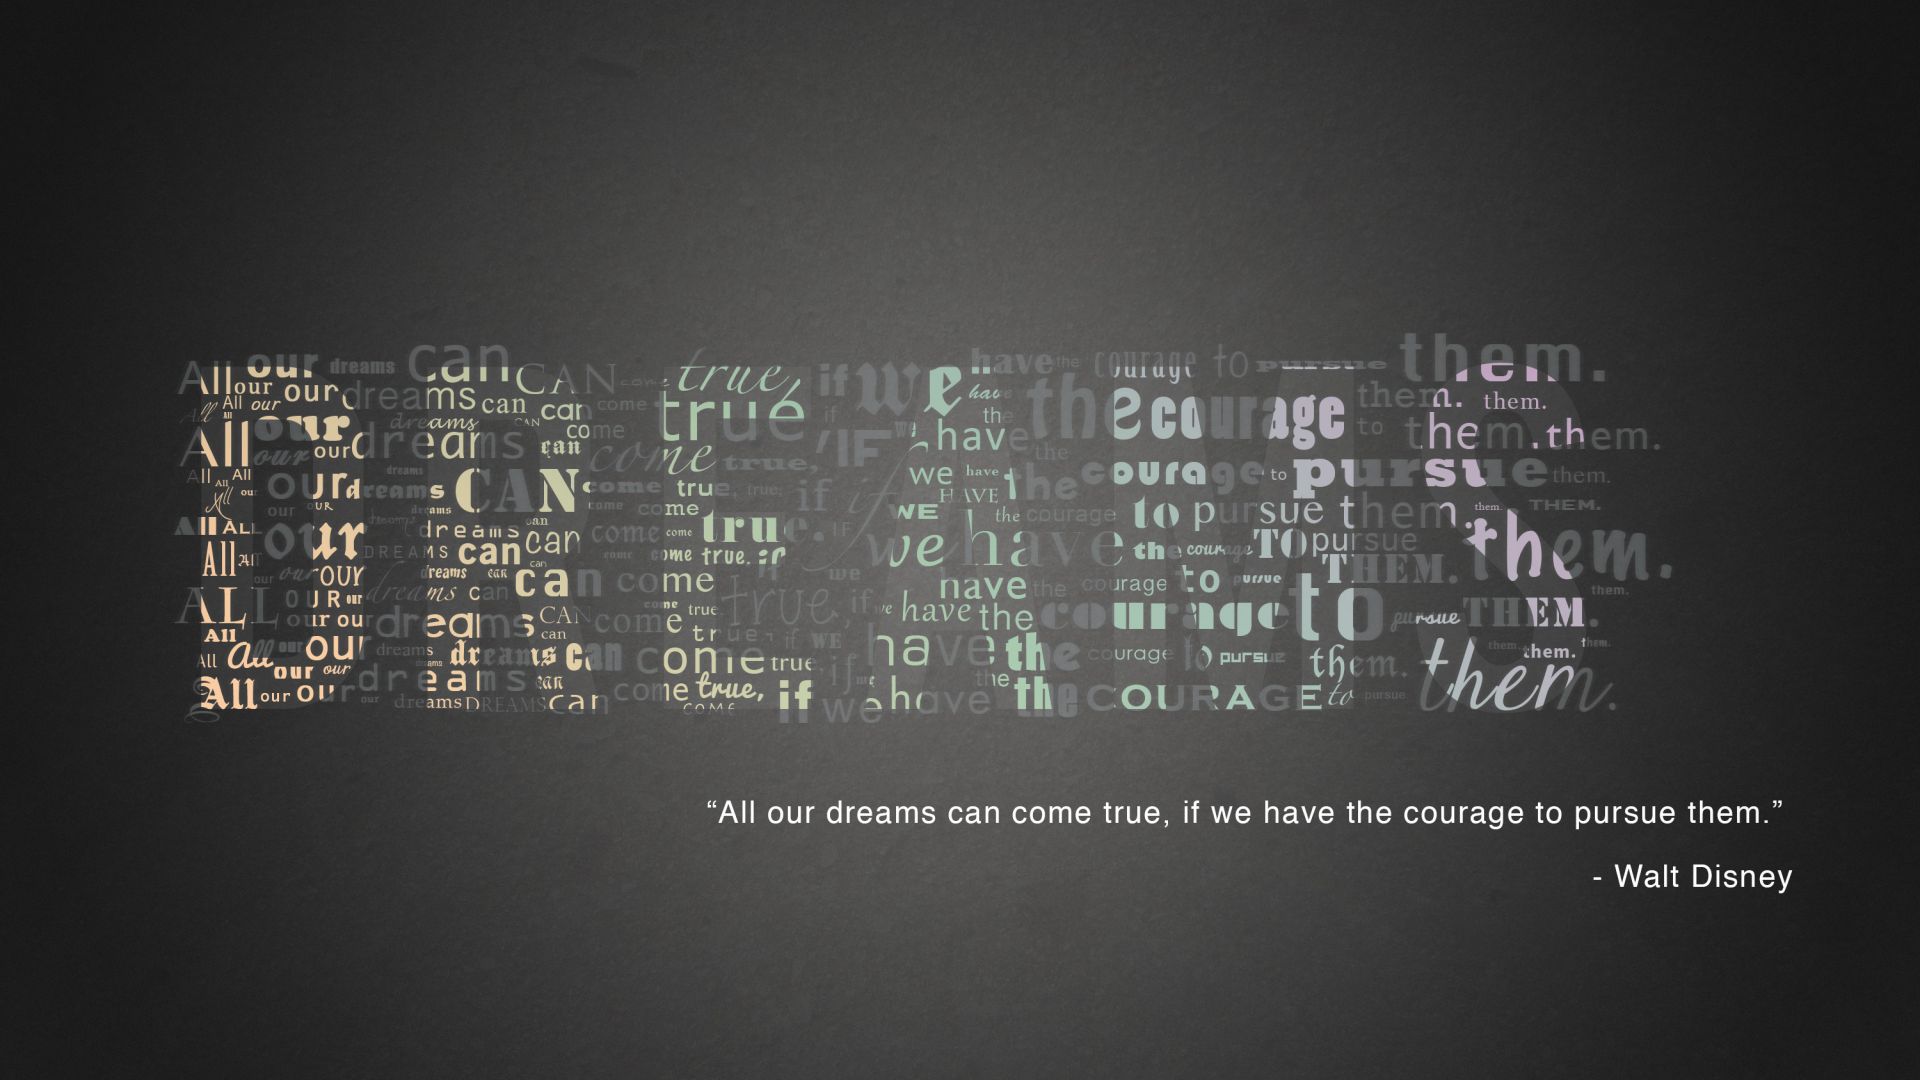 Desktop Wallpaper Quote On Dreams, Hd Image, Picture, Background, Kqm0kc